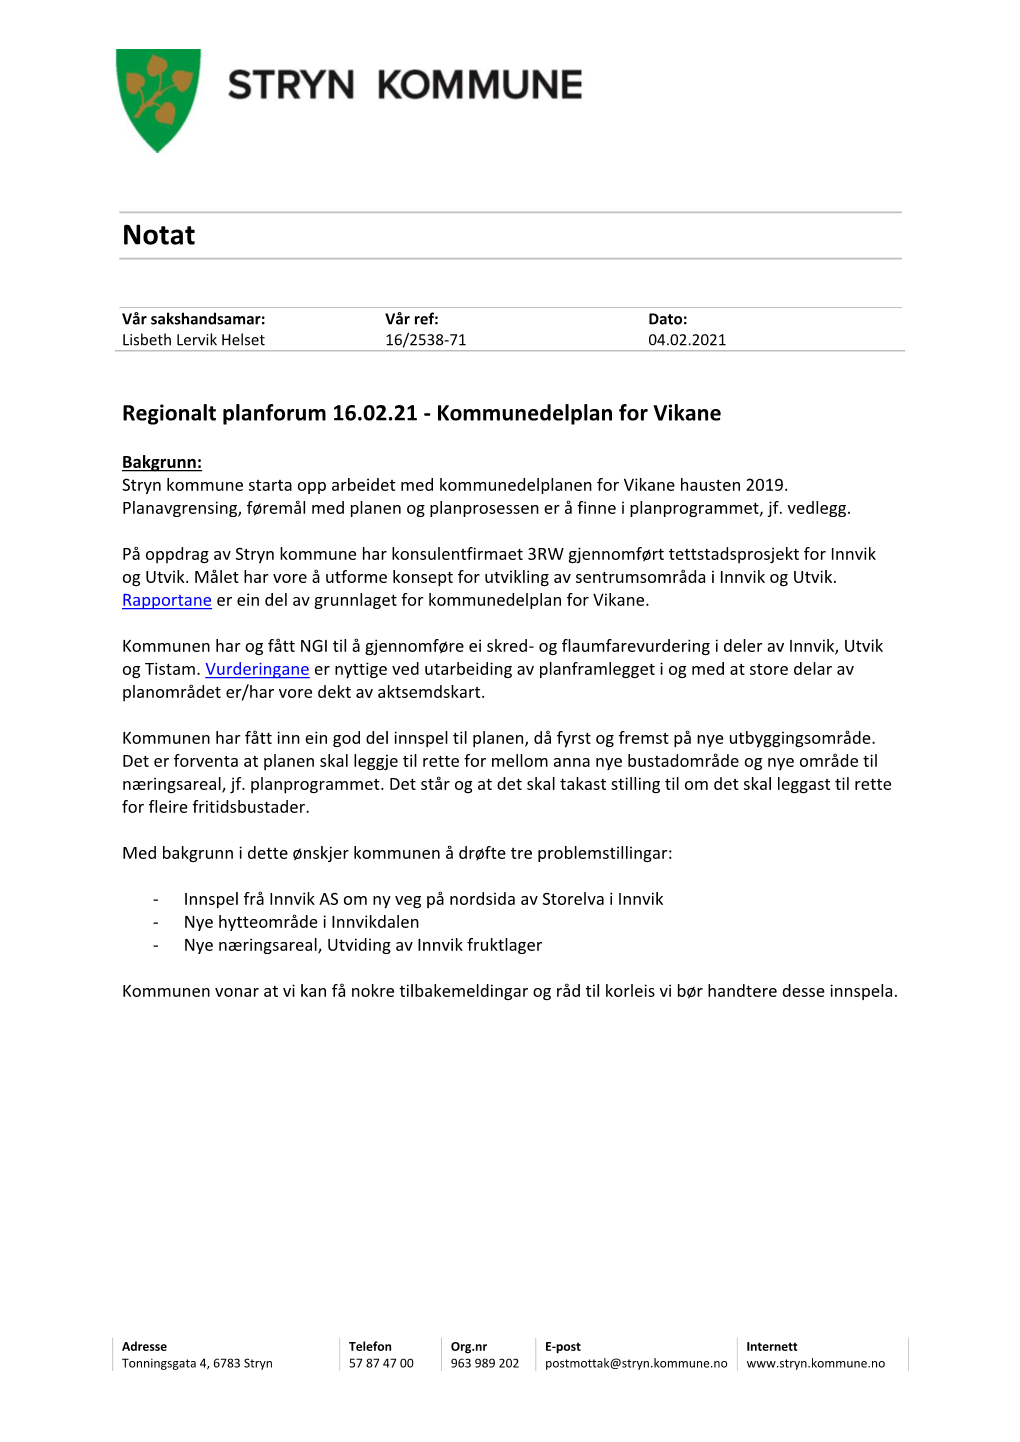 Regionalt Planforum 16.02.21 - Kommunedelplan for Vikane